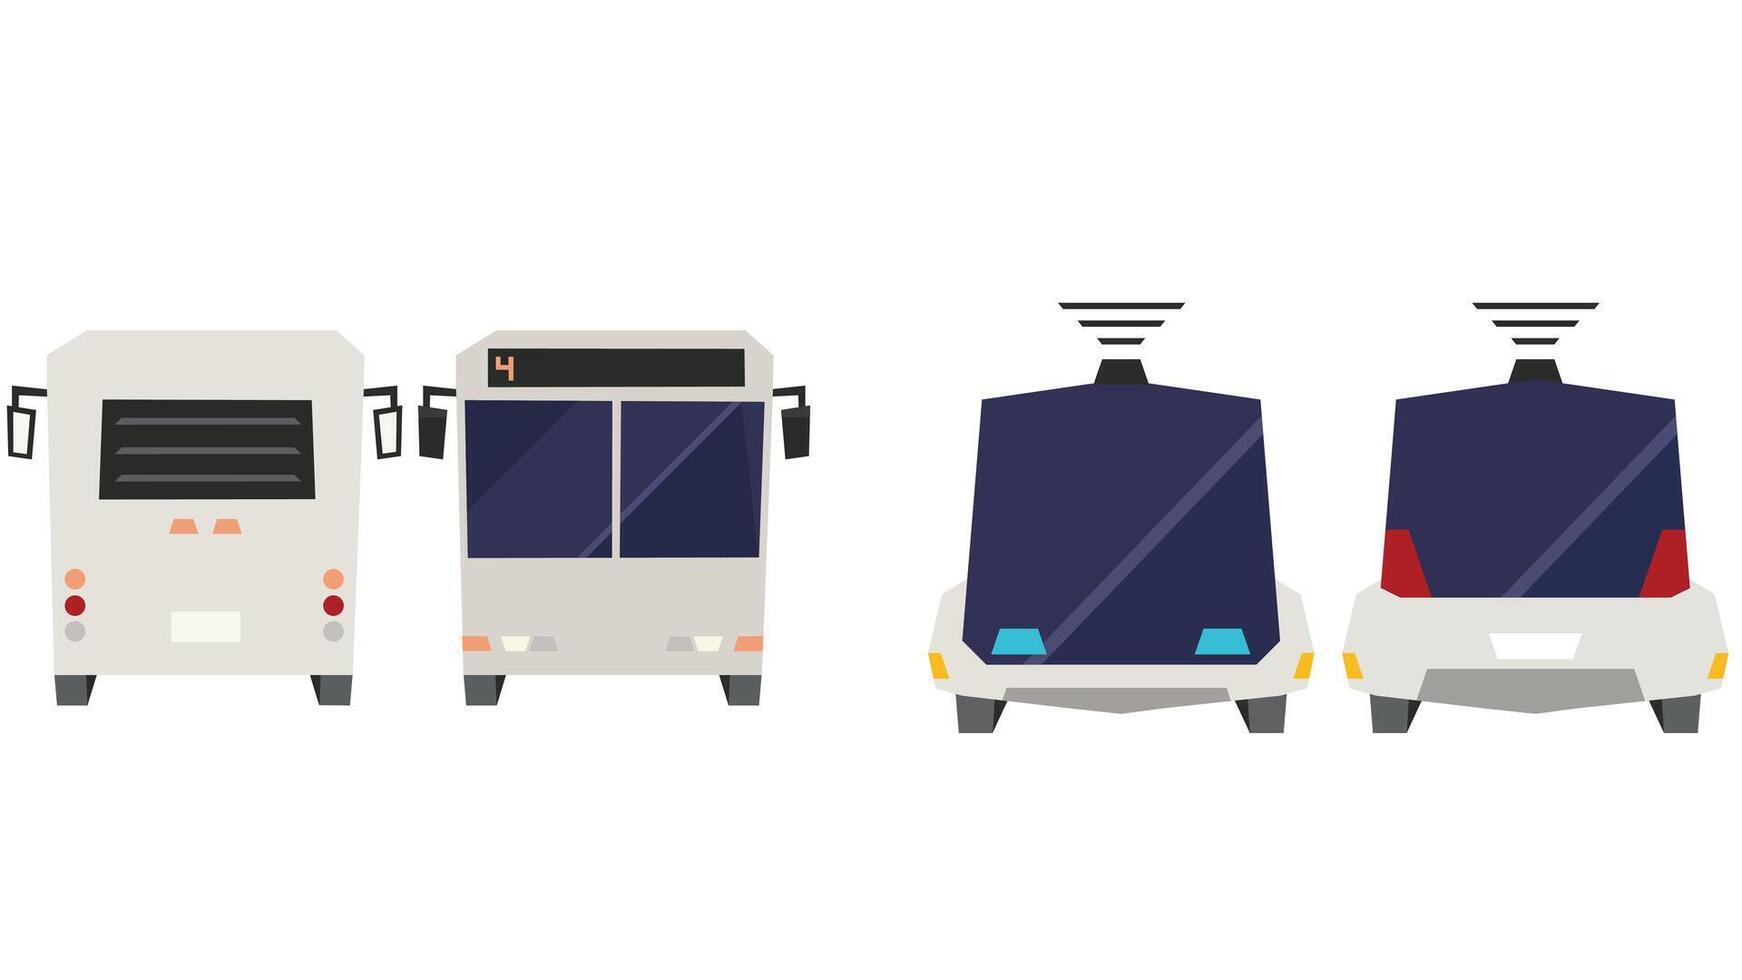 Public Transportation services inside the city for passengers Vector illustration